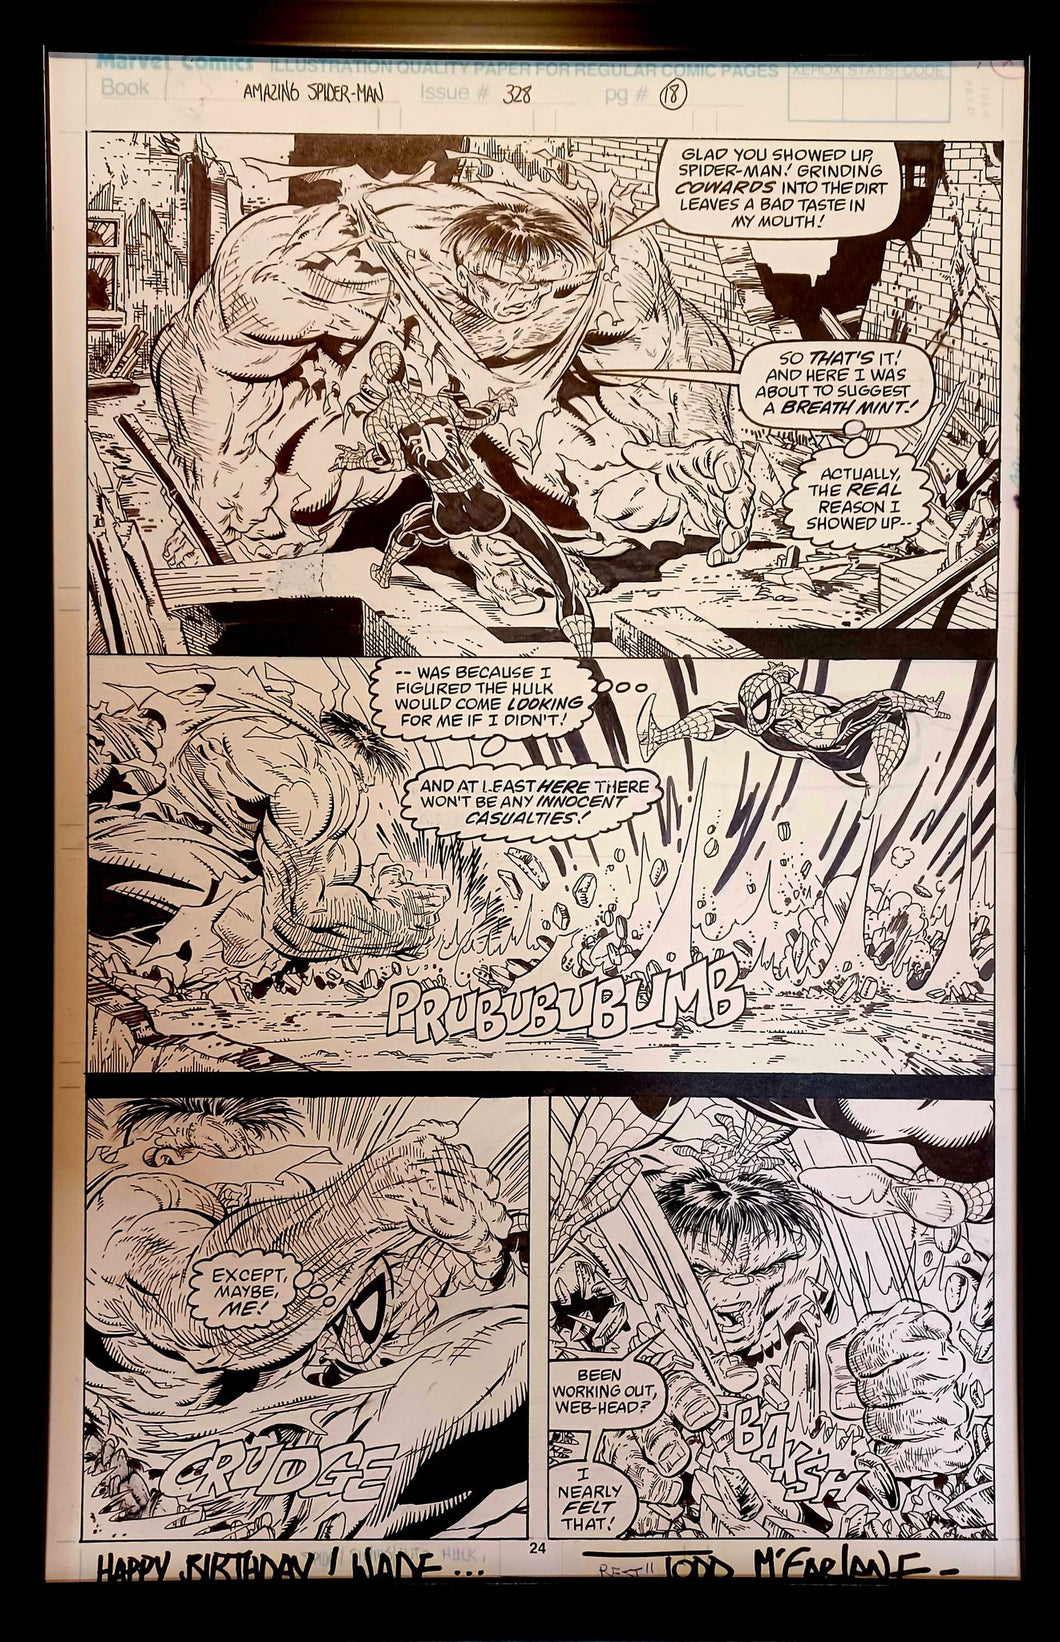 Amazing Spider-Man #328 pg. 18 by Todd McFarlane 11x17 FRAMED Original Art Print Comic Poster